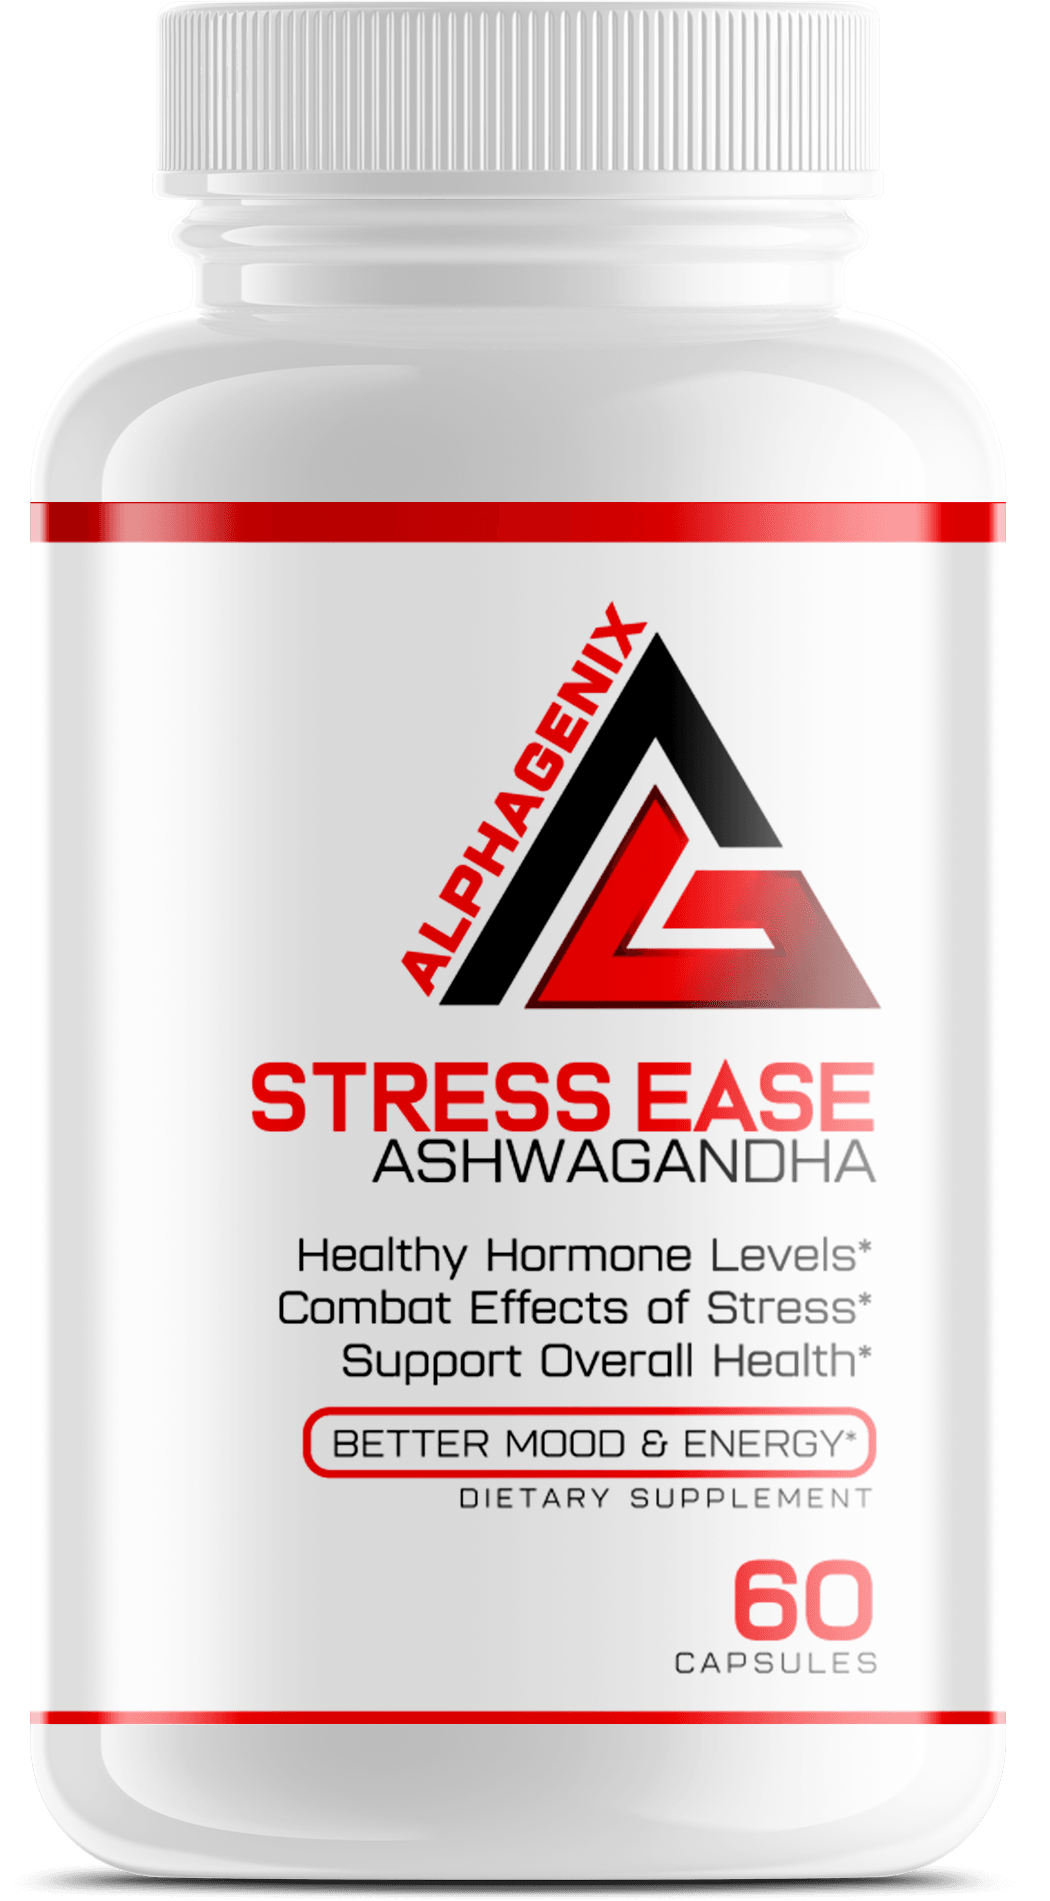 StressEase - Ashwagandha For Better Mood, Energy, & Less Stress - AlphaGenix